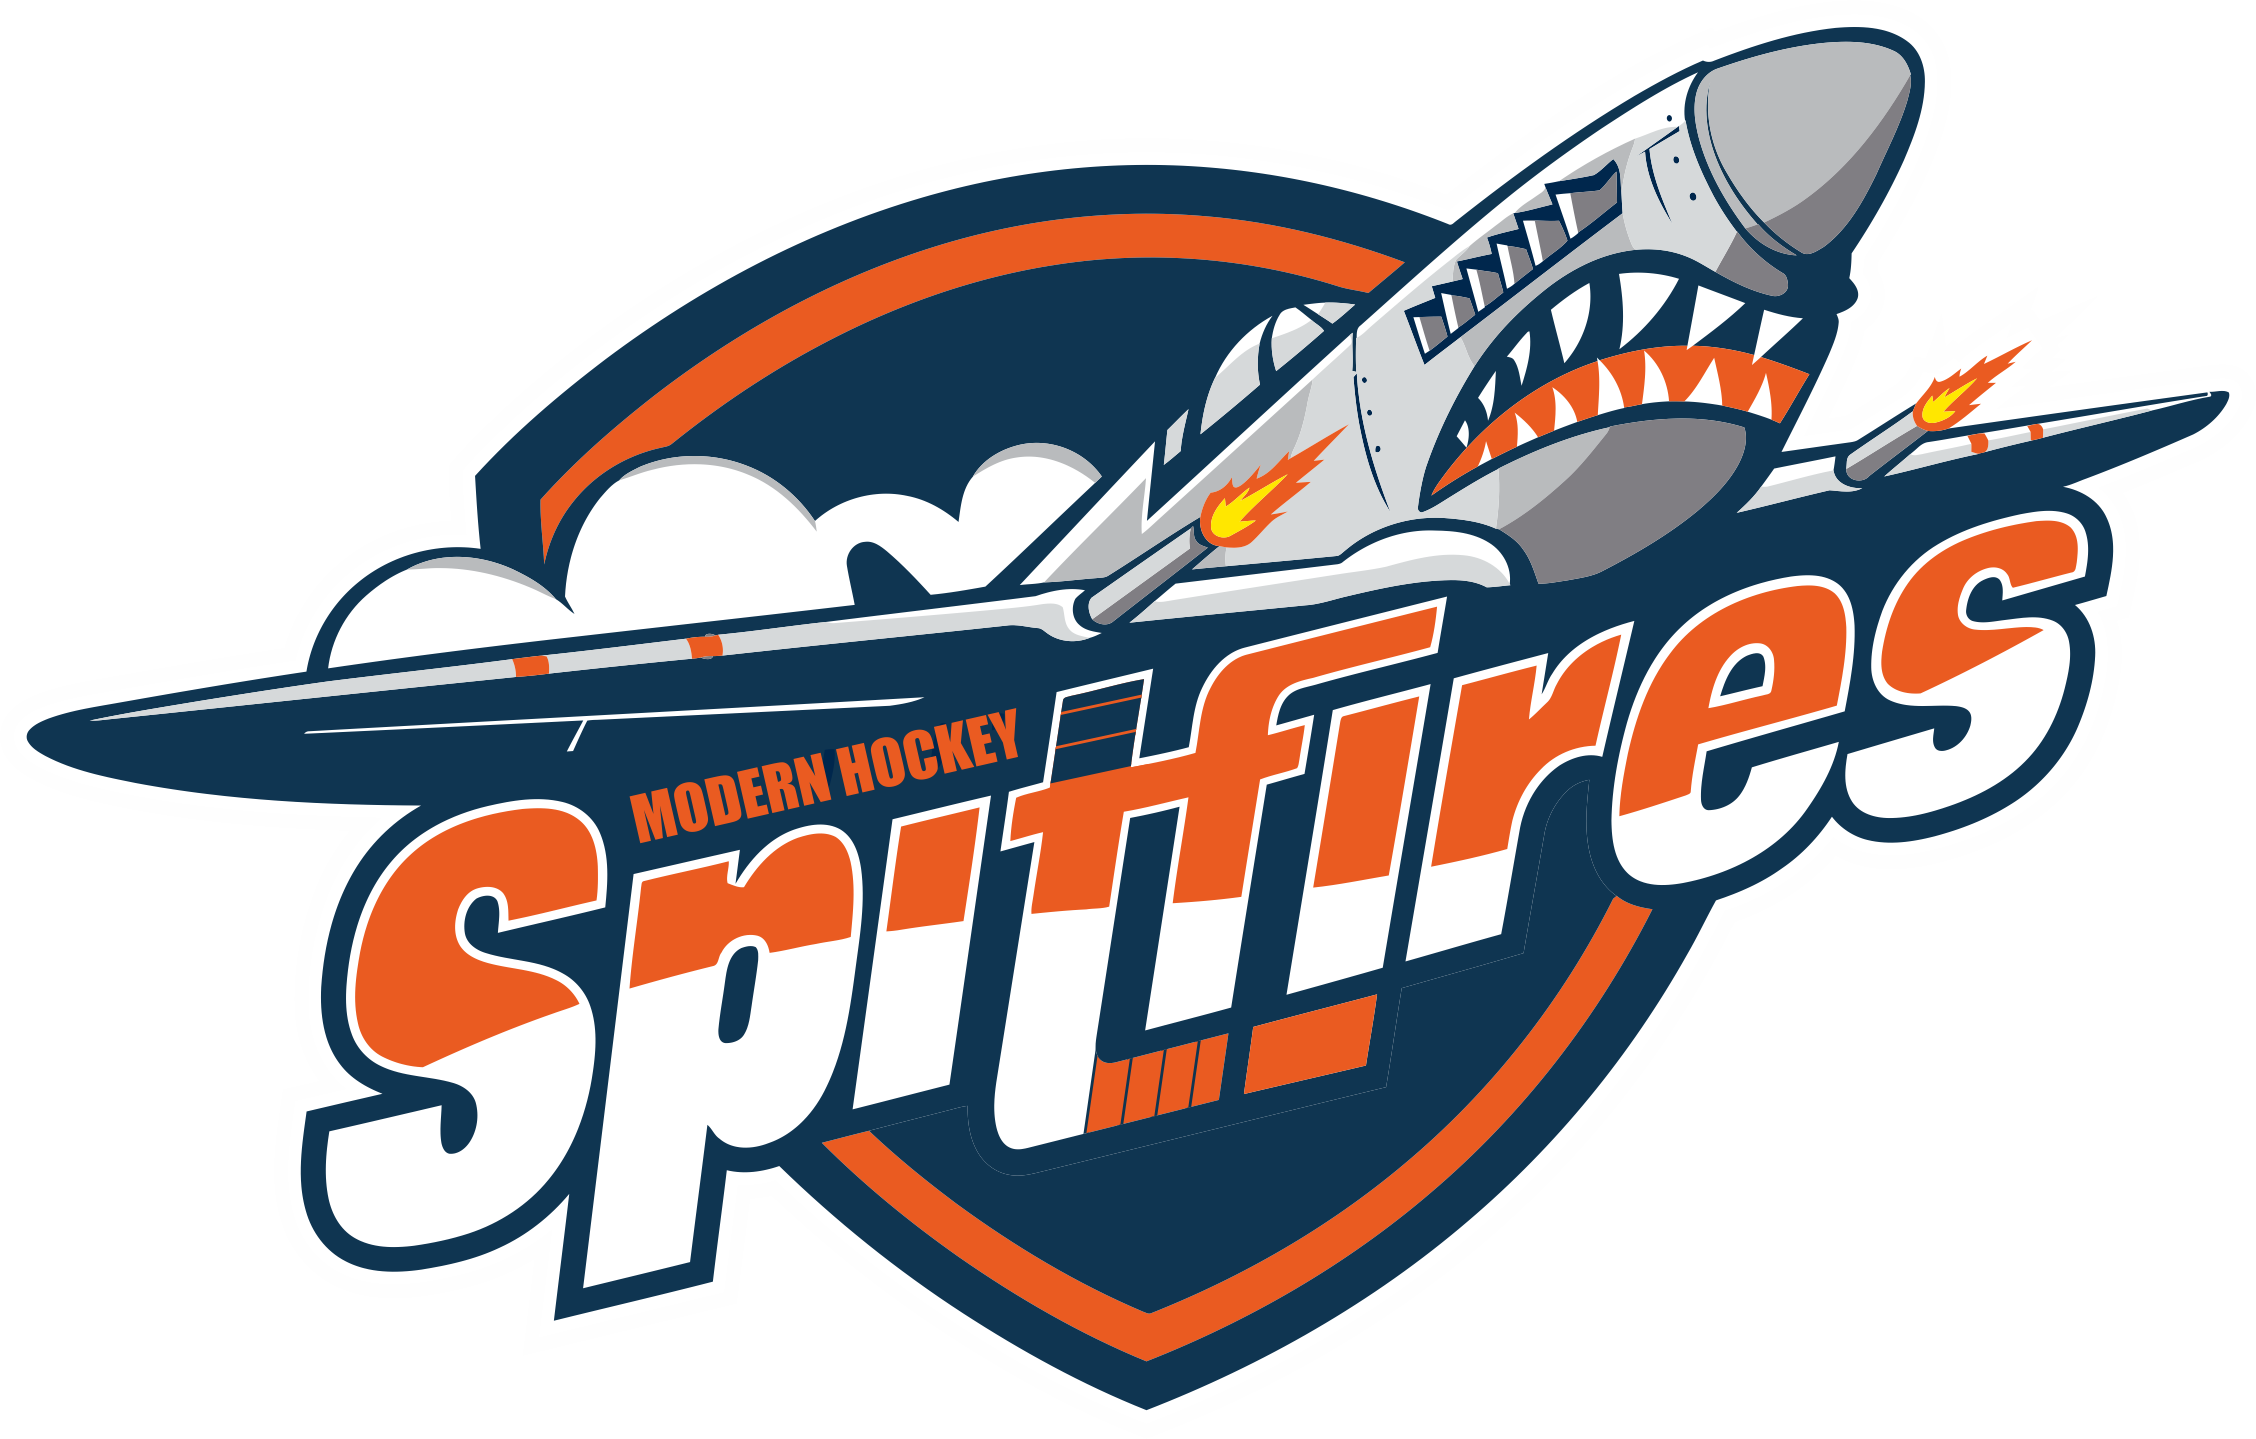 spitfires_logo_hobbyhokej_brno